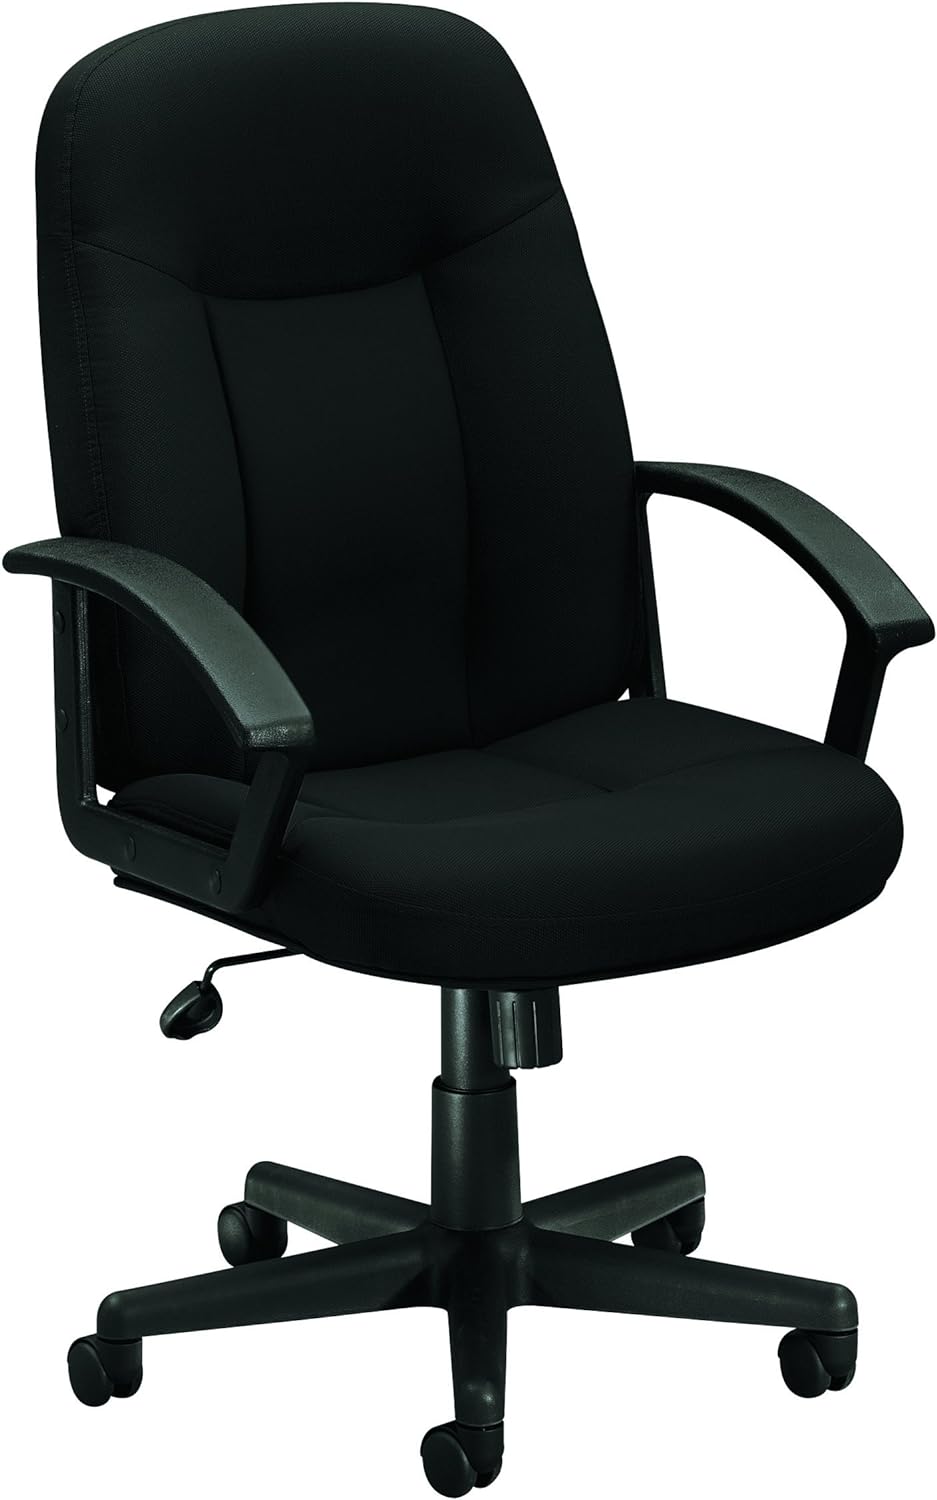 HON Executive High-Back Swivel/Tilt Chair, Black Fabric & Frame (HVL601)